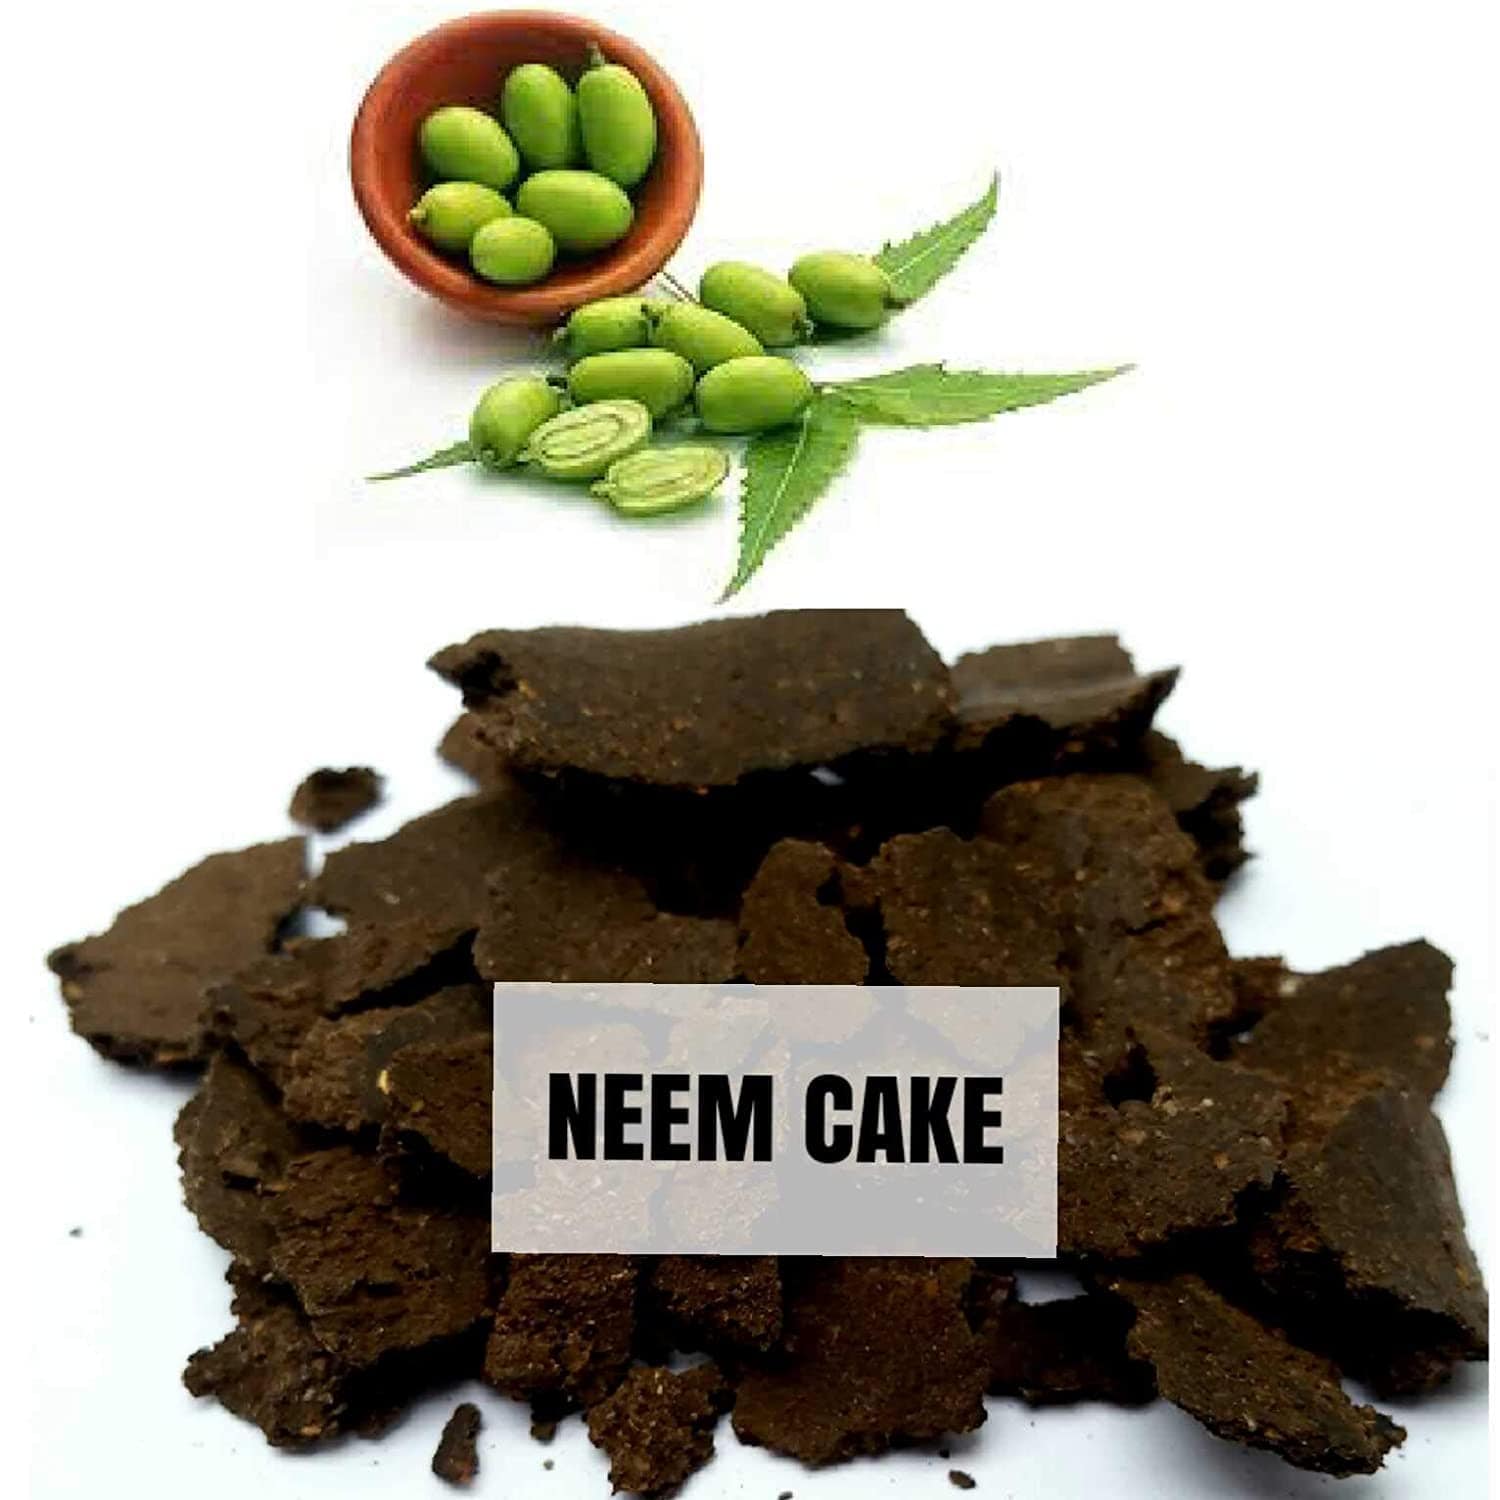 Shiviproducts Neem Khali Cake (Organic)